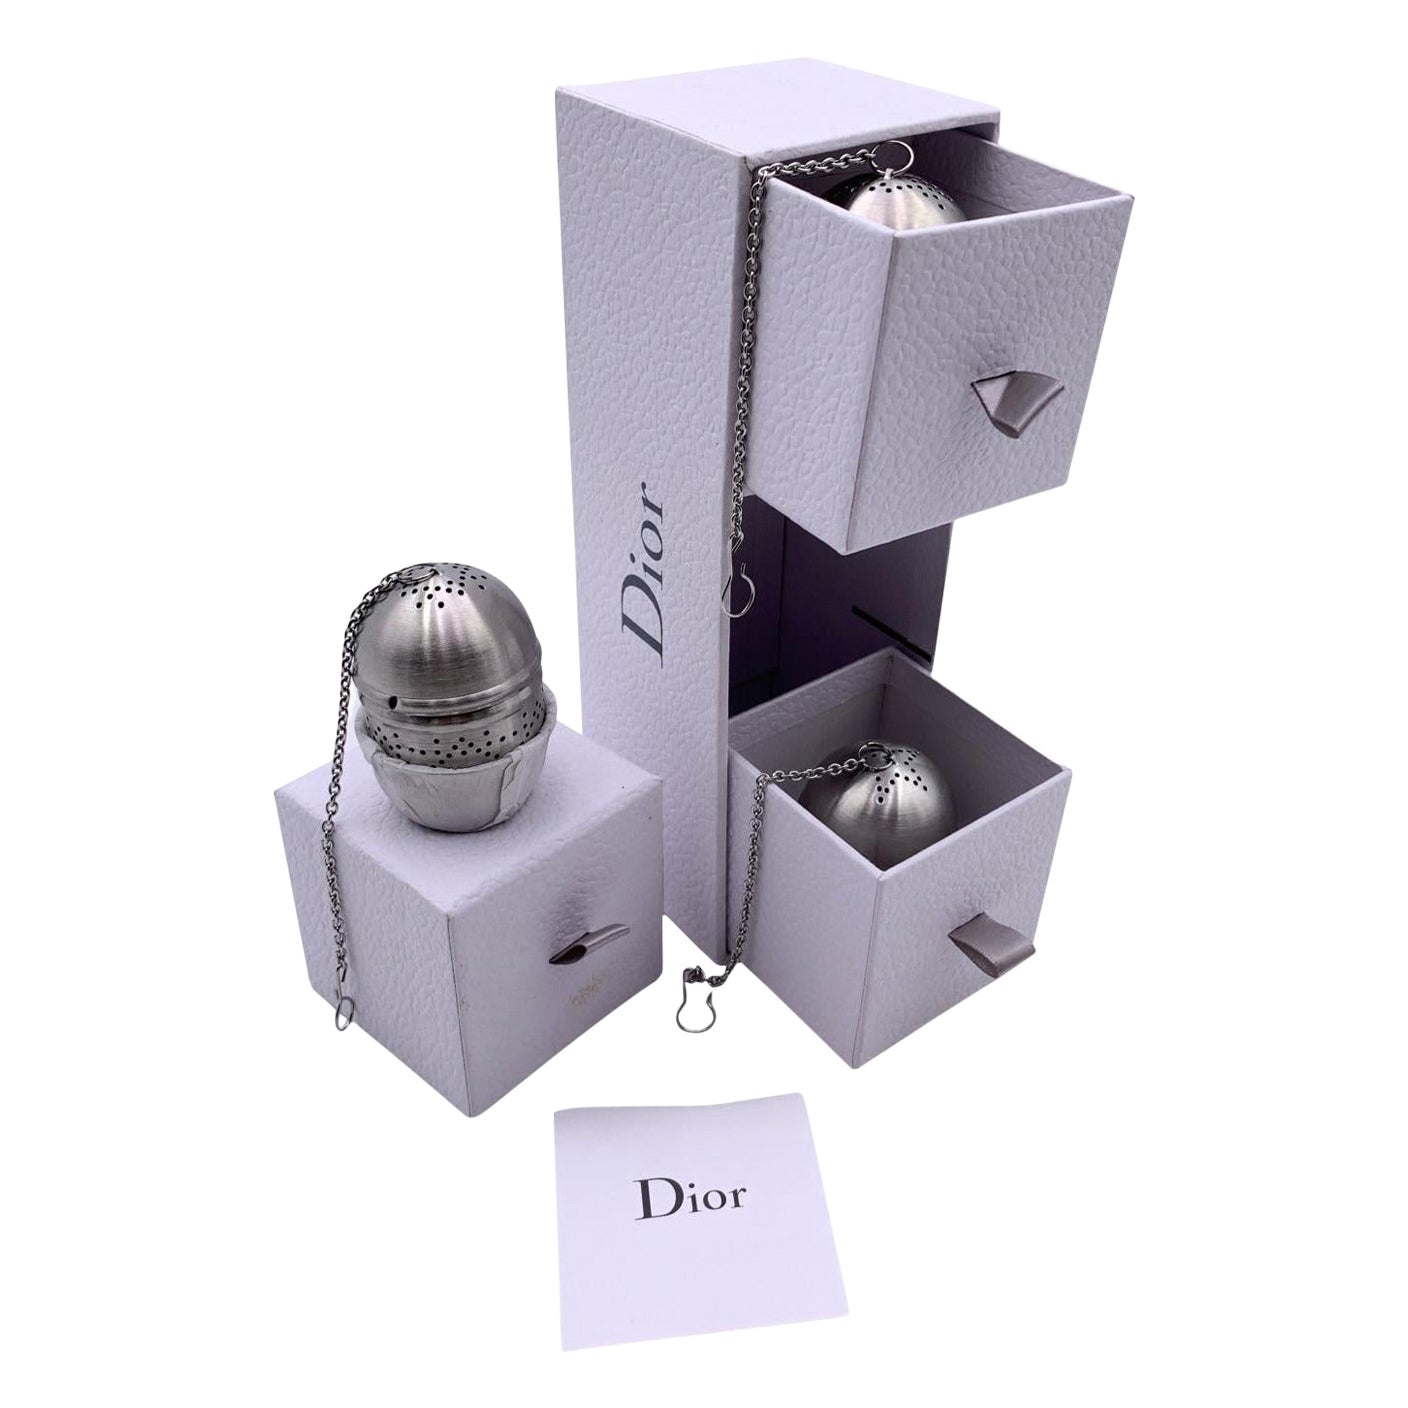 Christian Dior Limitierte Auflage Teezeit Silber Metall-Teeschaufel-Set